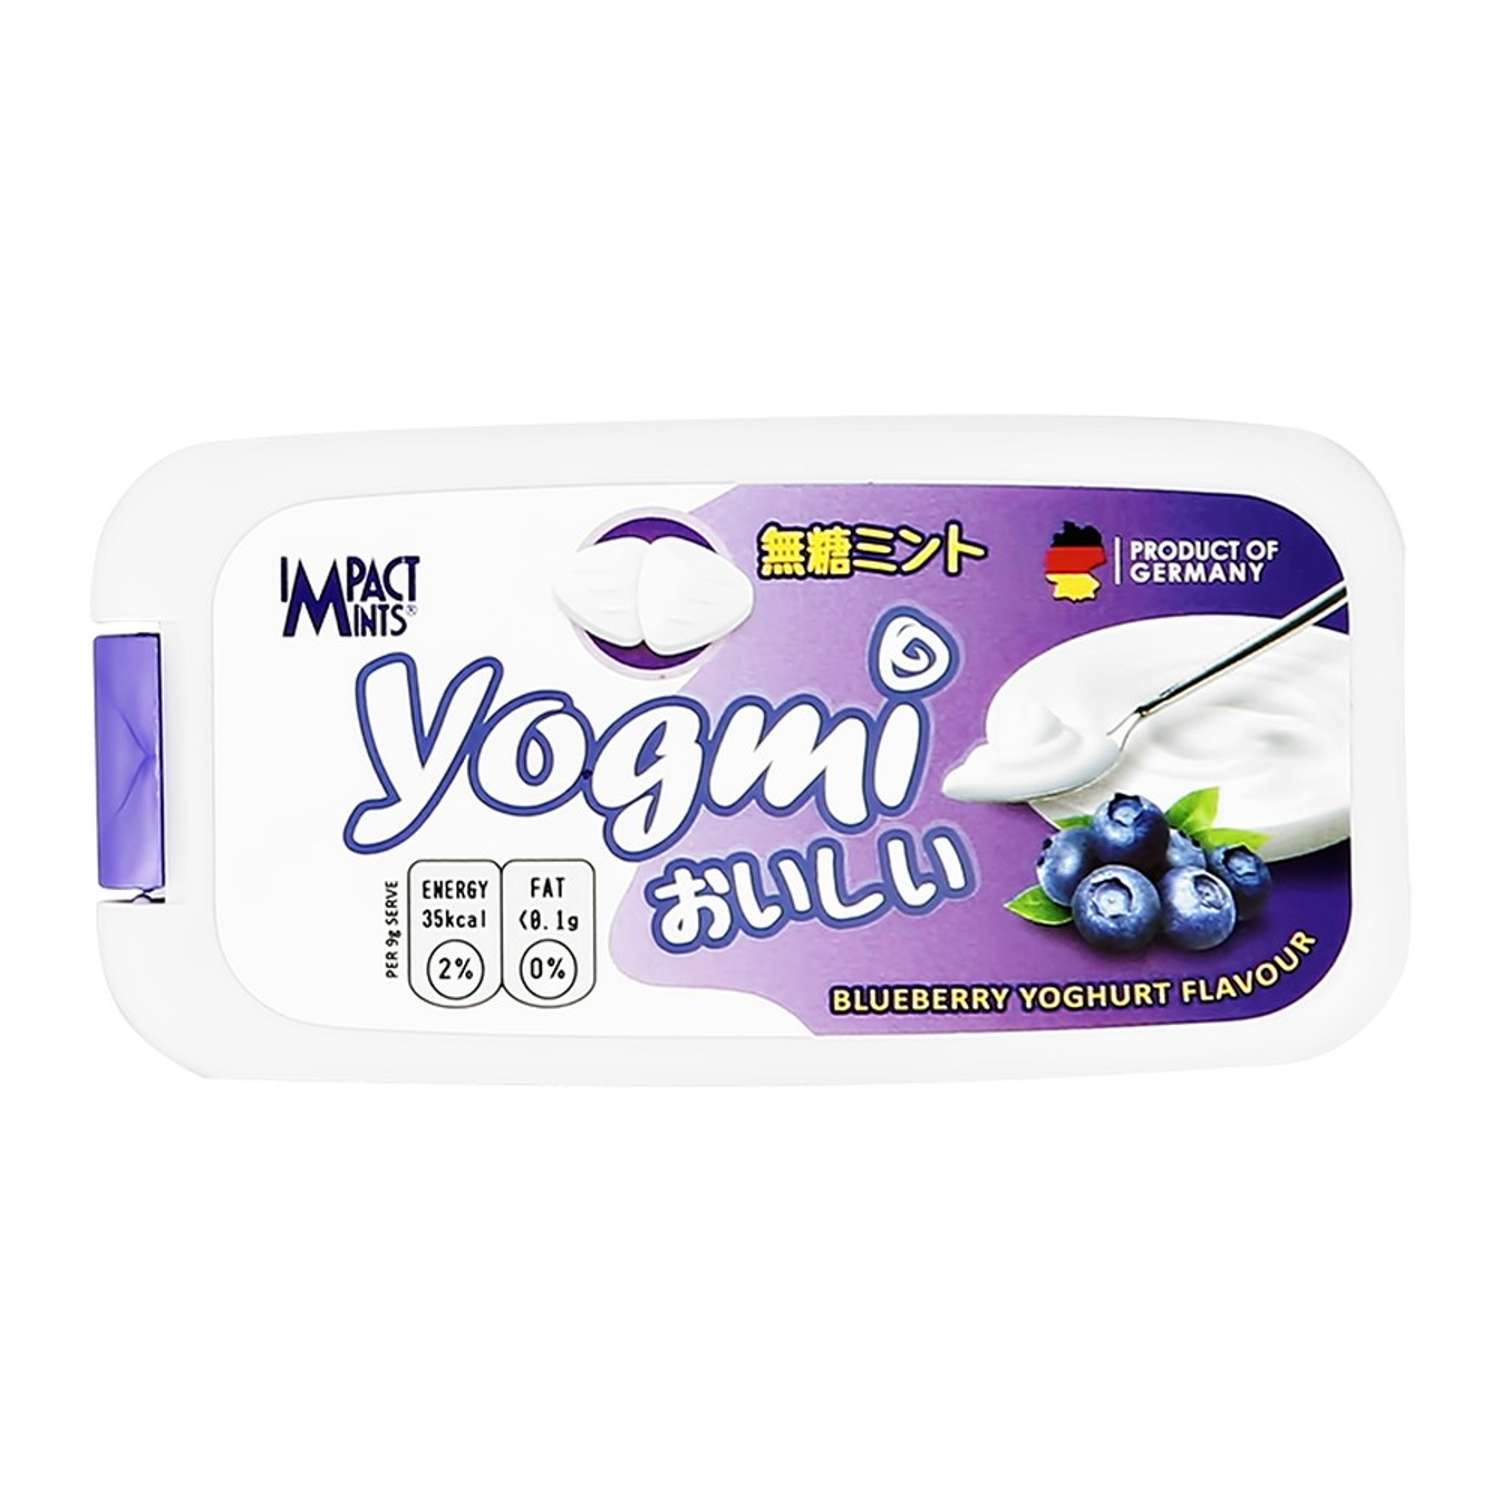 Освежающие драже IMPACT Mints Yogmi без сахара со вкусом йогурта с голубикой 9 г - фото 1